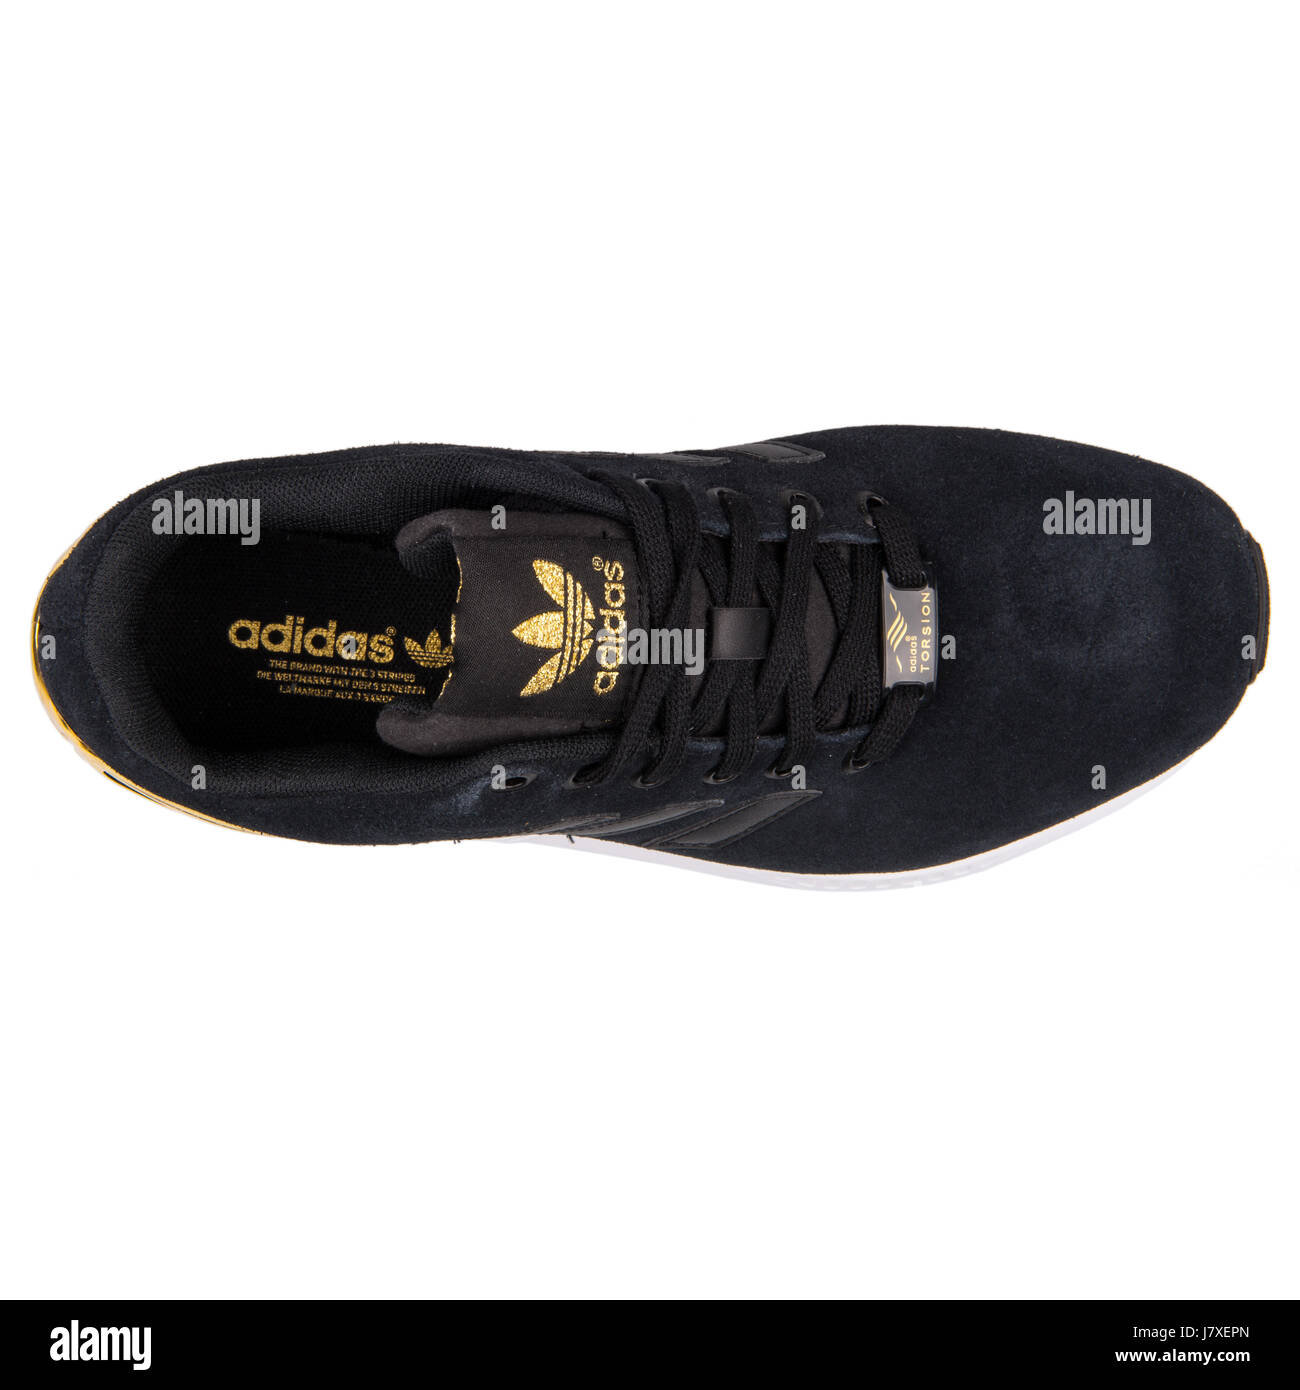 Adidas ZX Flux W Women's Black and Gold Sneakers - B35319 Stock ... عطر توباكو ابراهيم القرشي